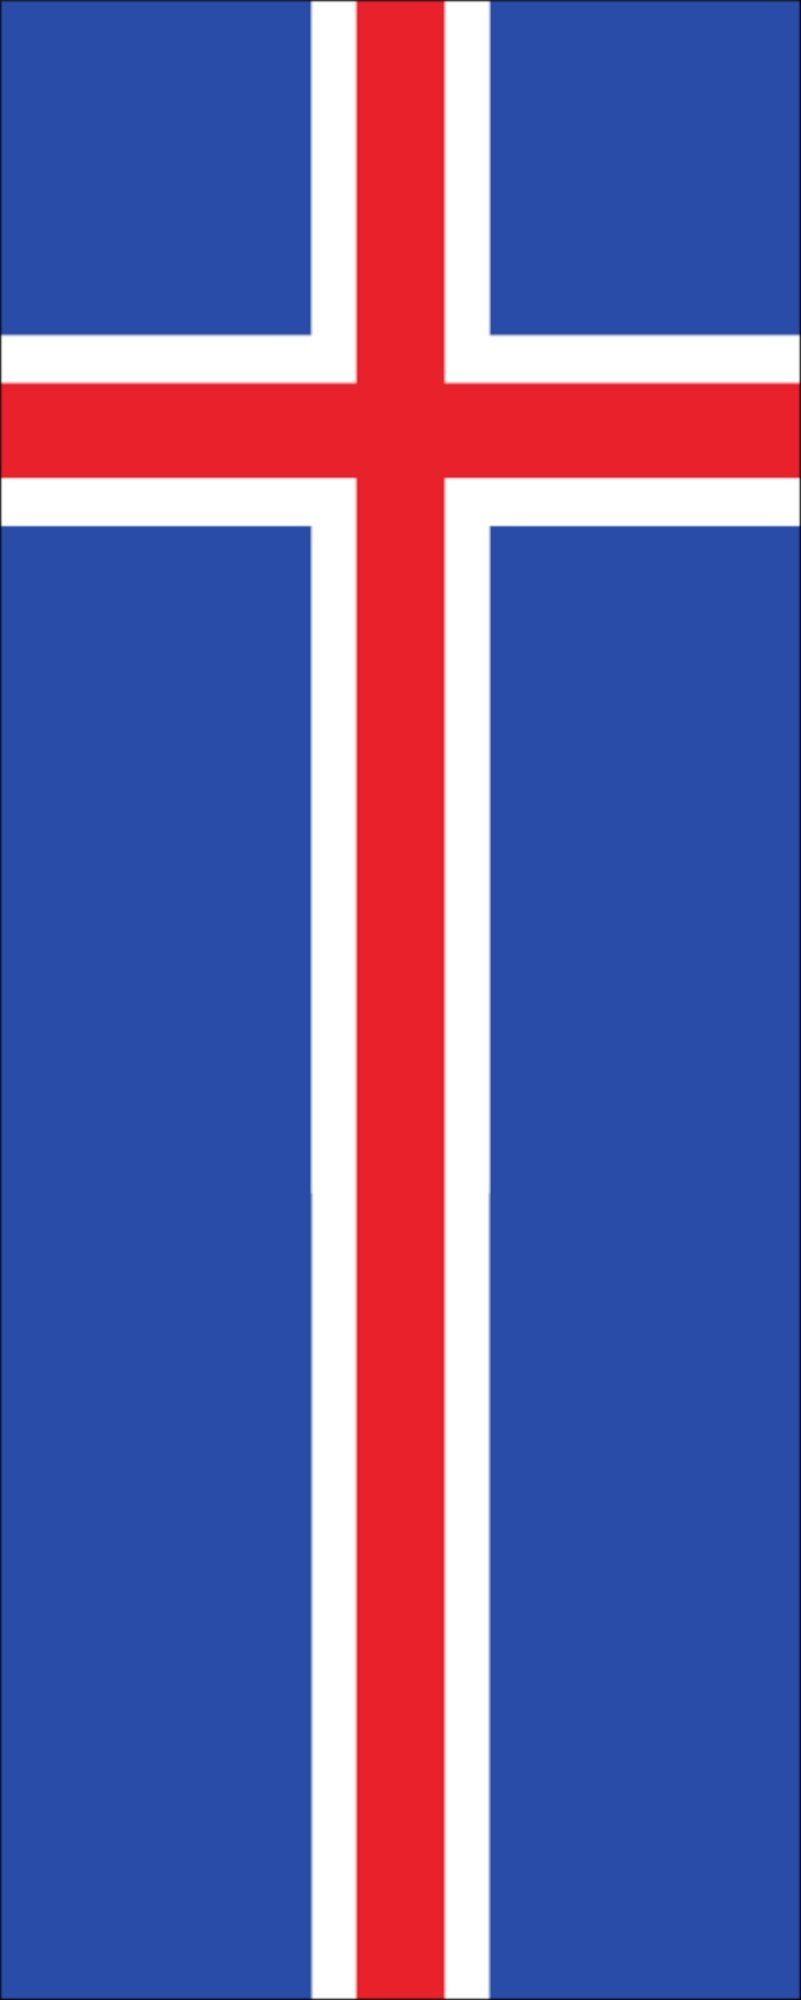 Island 110 Hochformat flaggenmeer g/m² Flagge Flagge